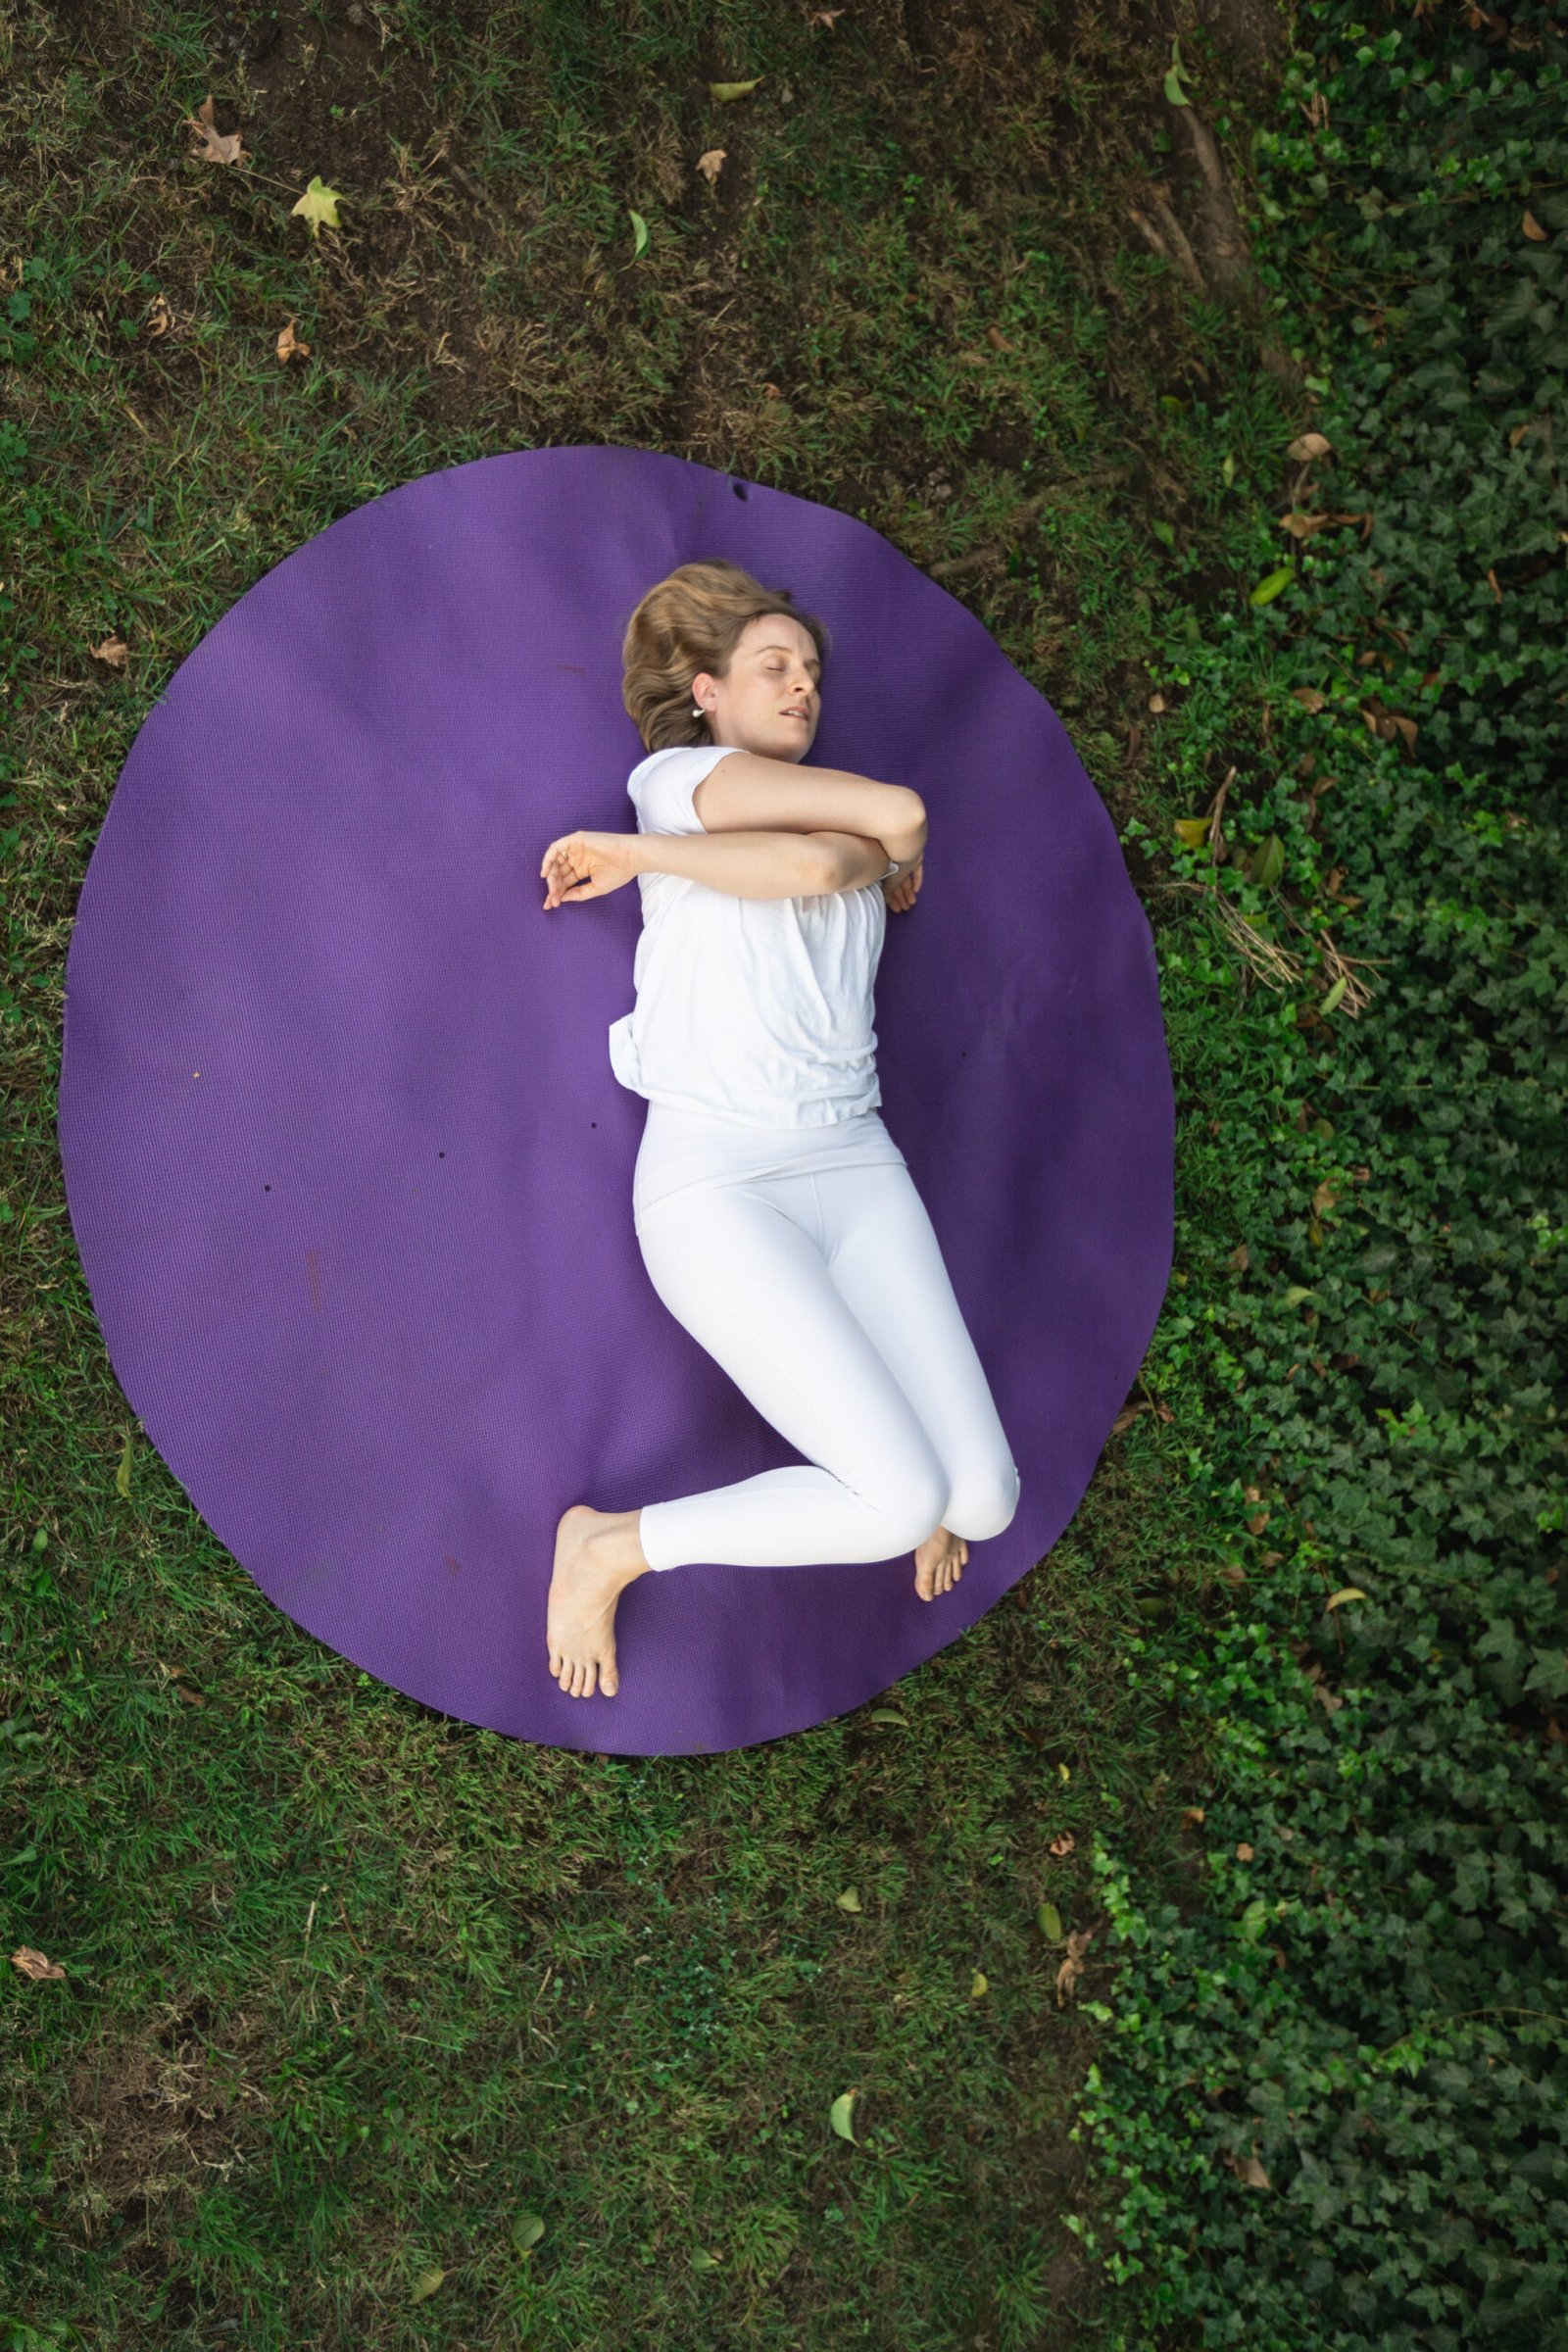 Charlotte lying on a purple mat stretching